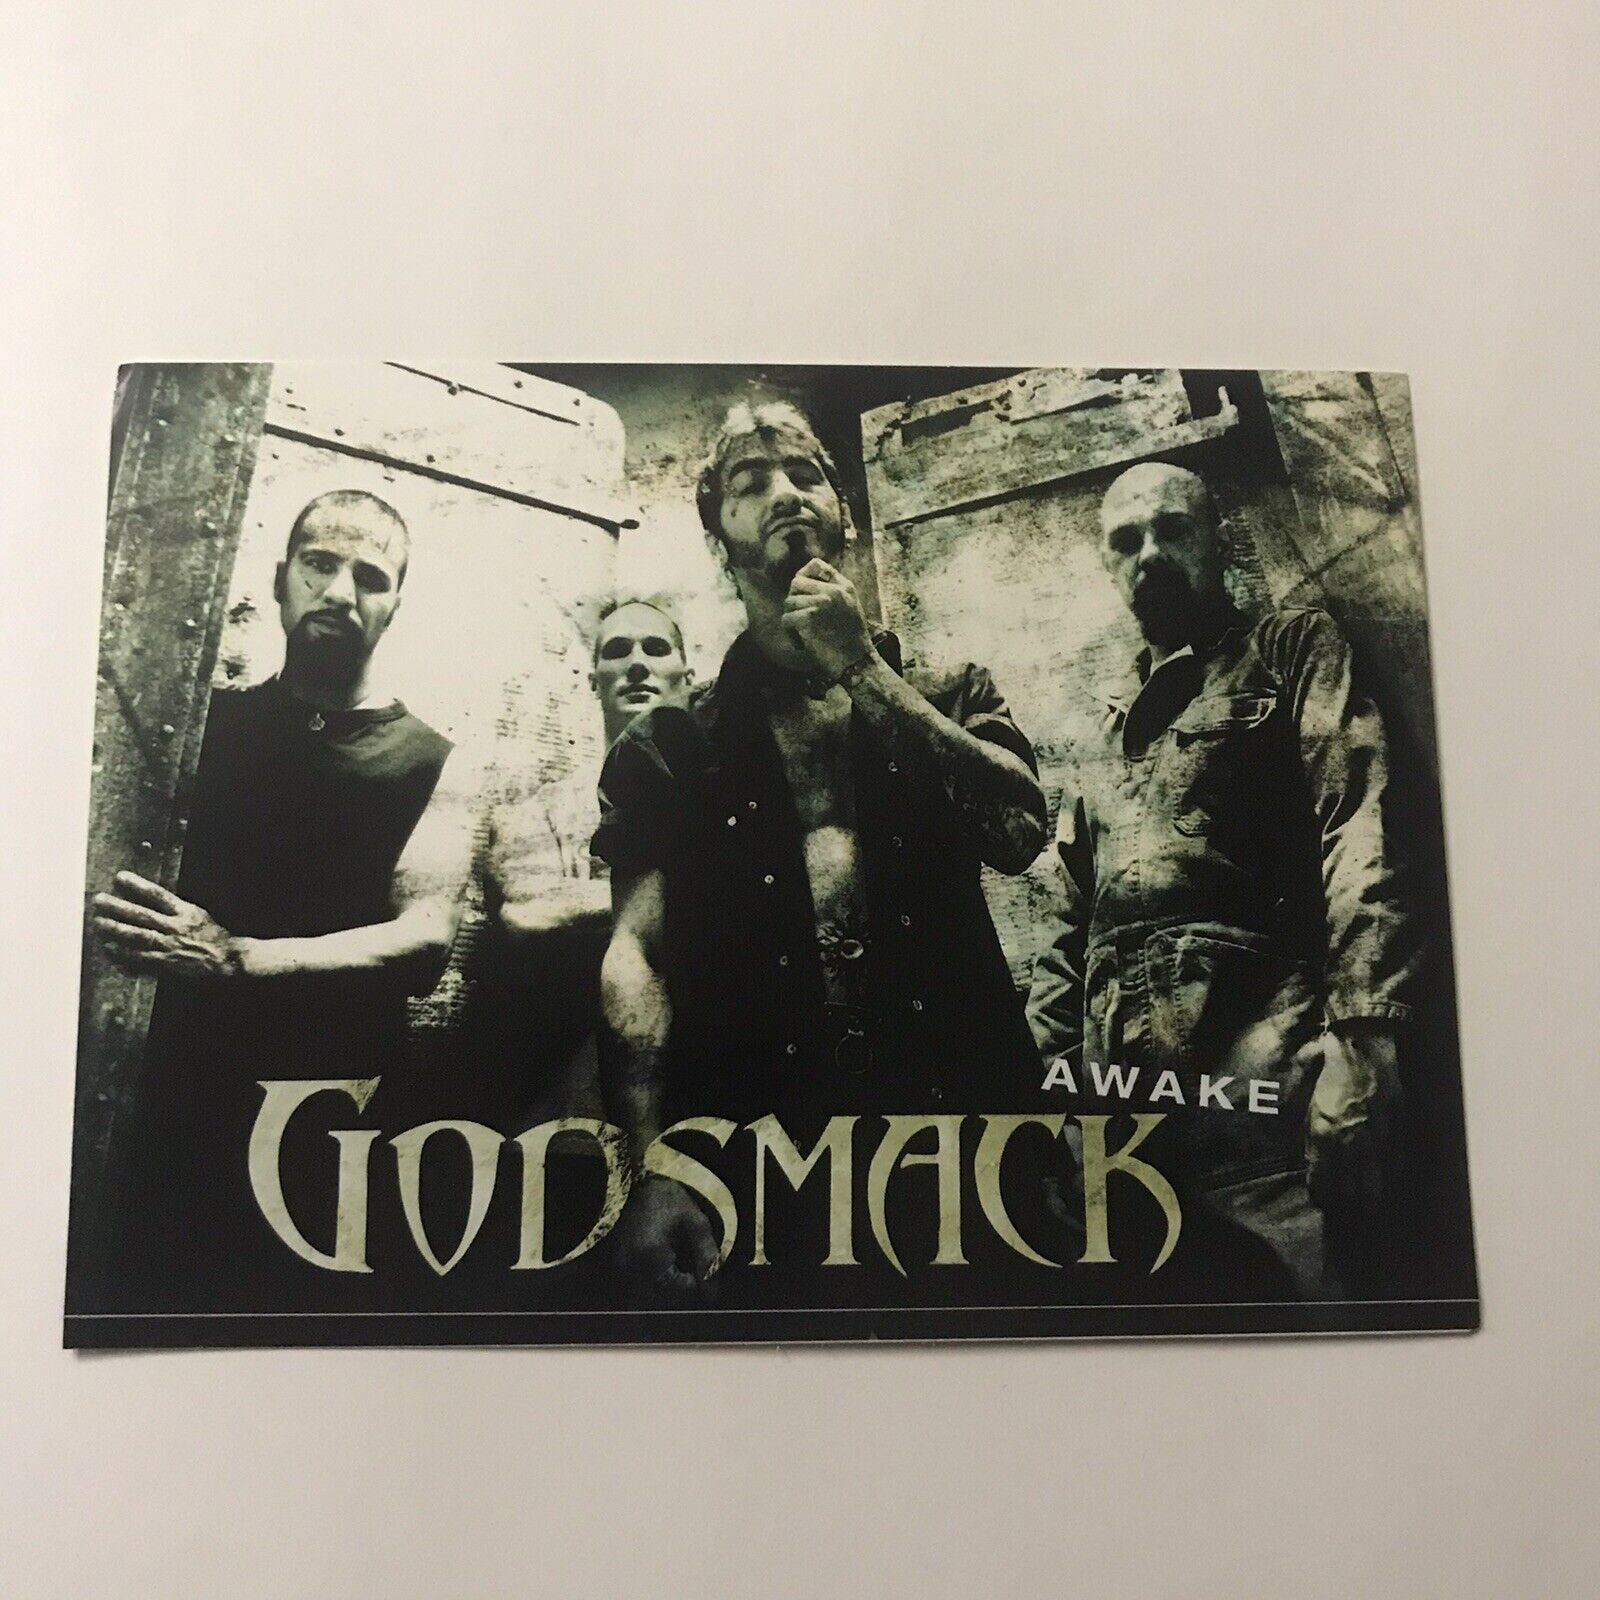 Godsmack Awake Promotional Album Release Sticker Car Decal Vintage 2000